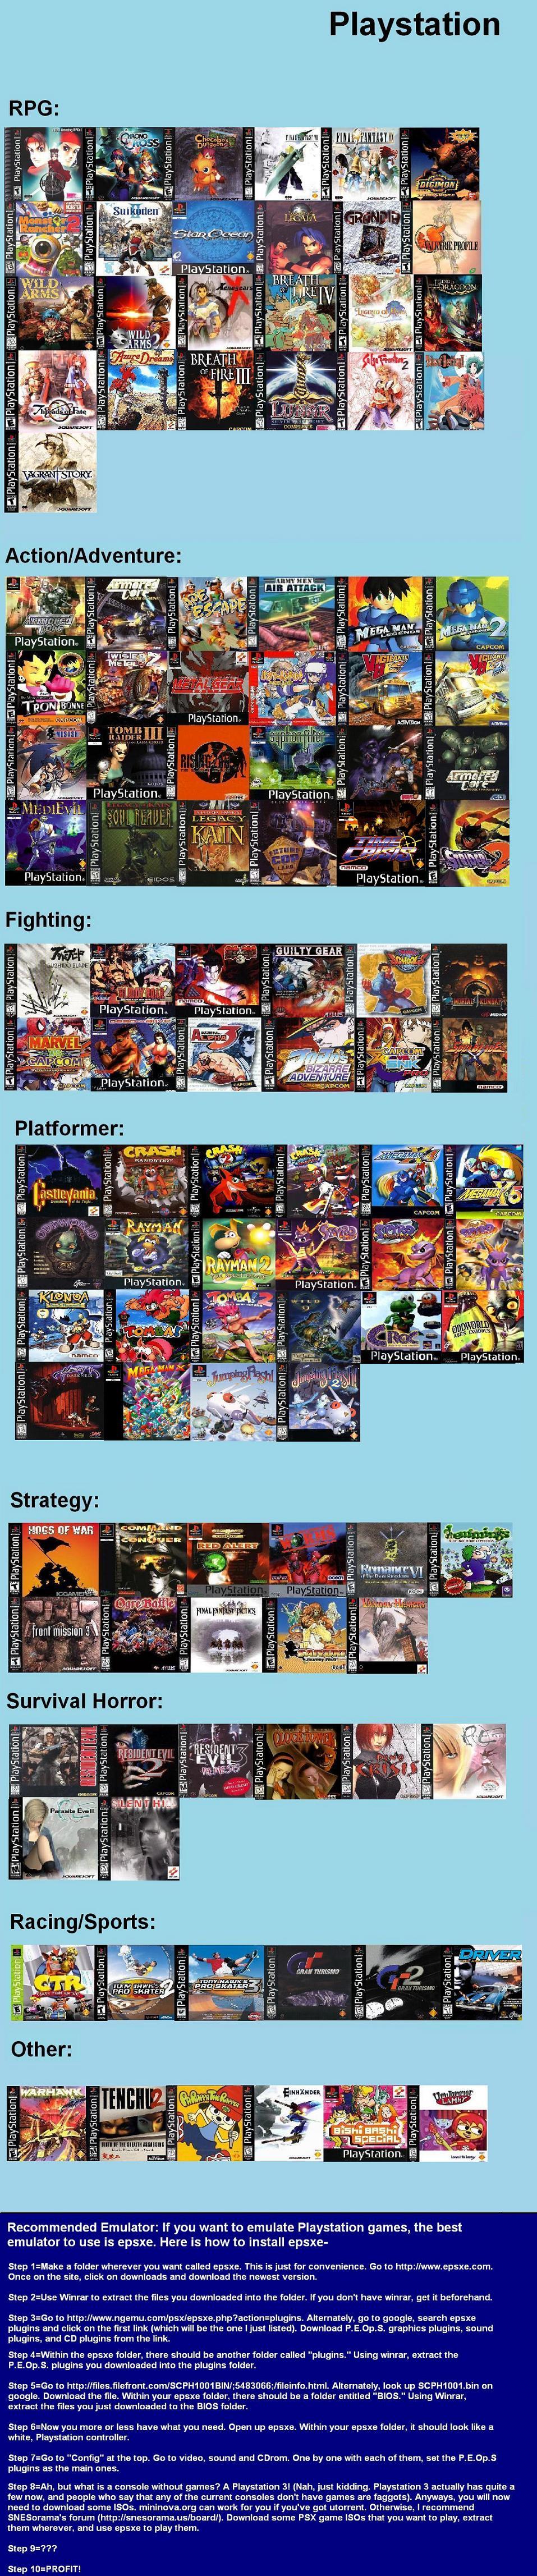 Gameshark for the Playstation 2 : r/nostalgia